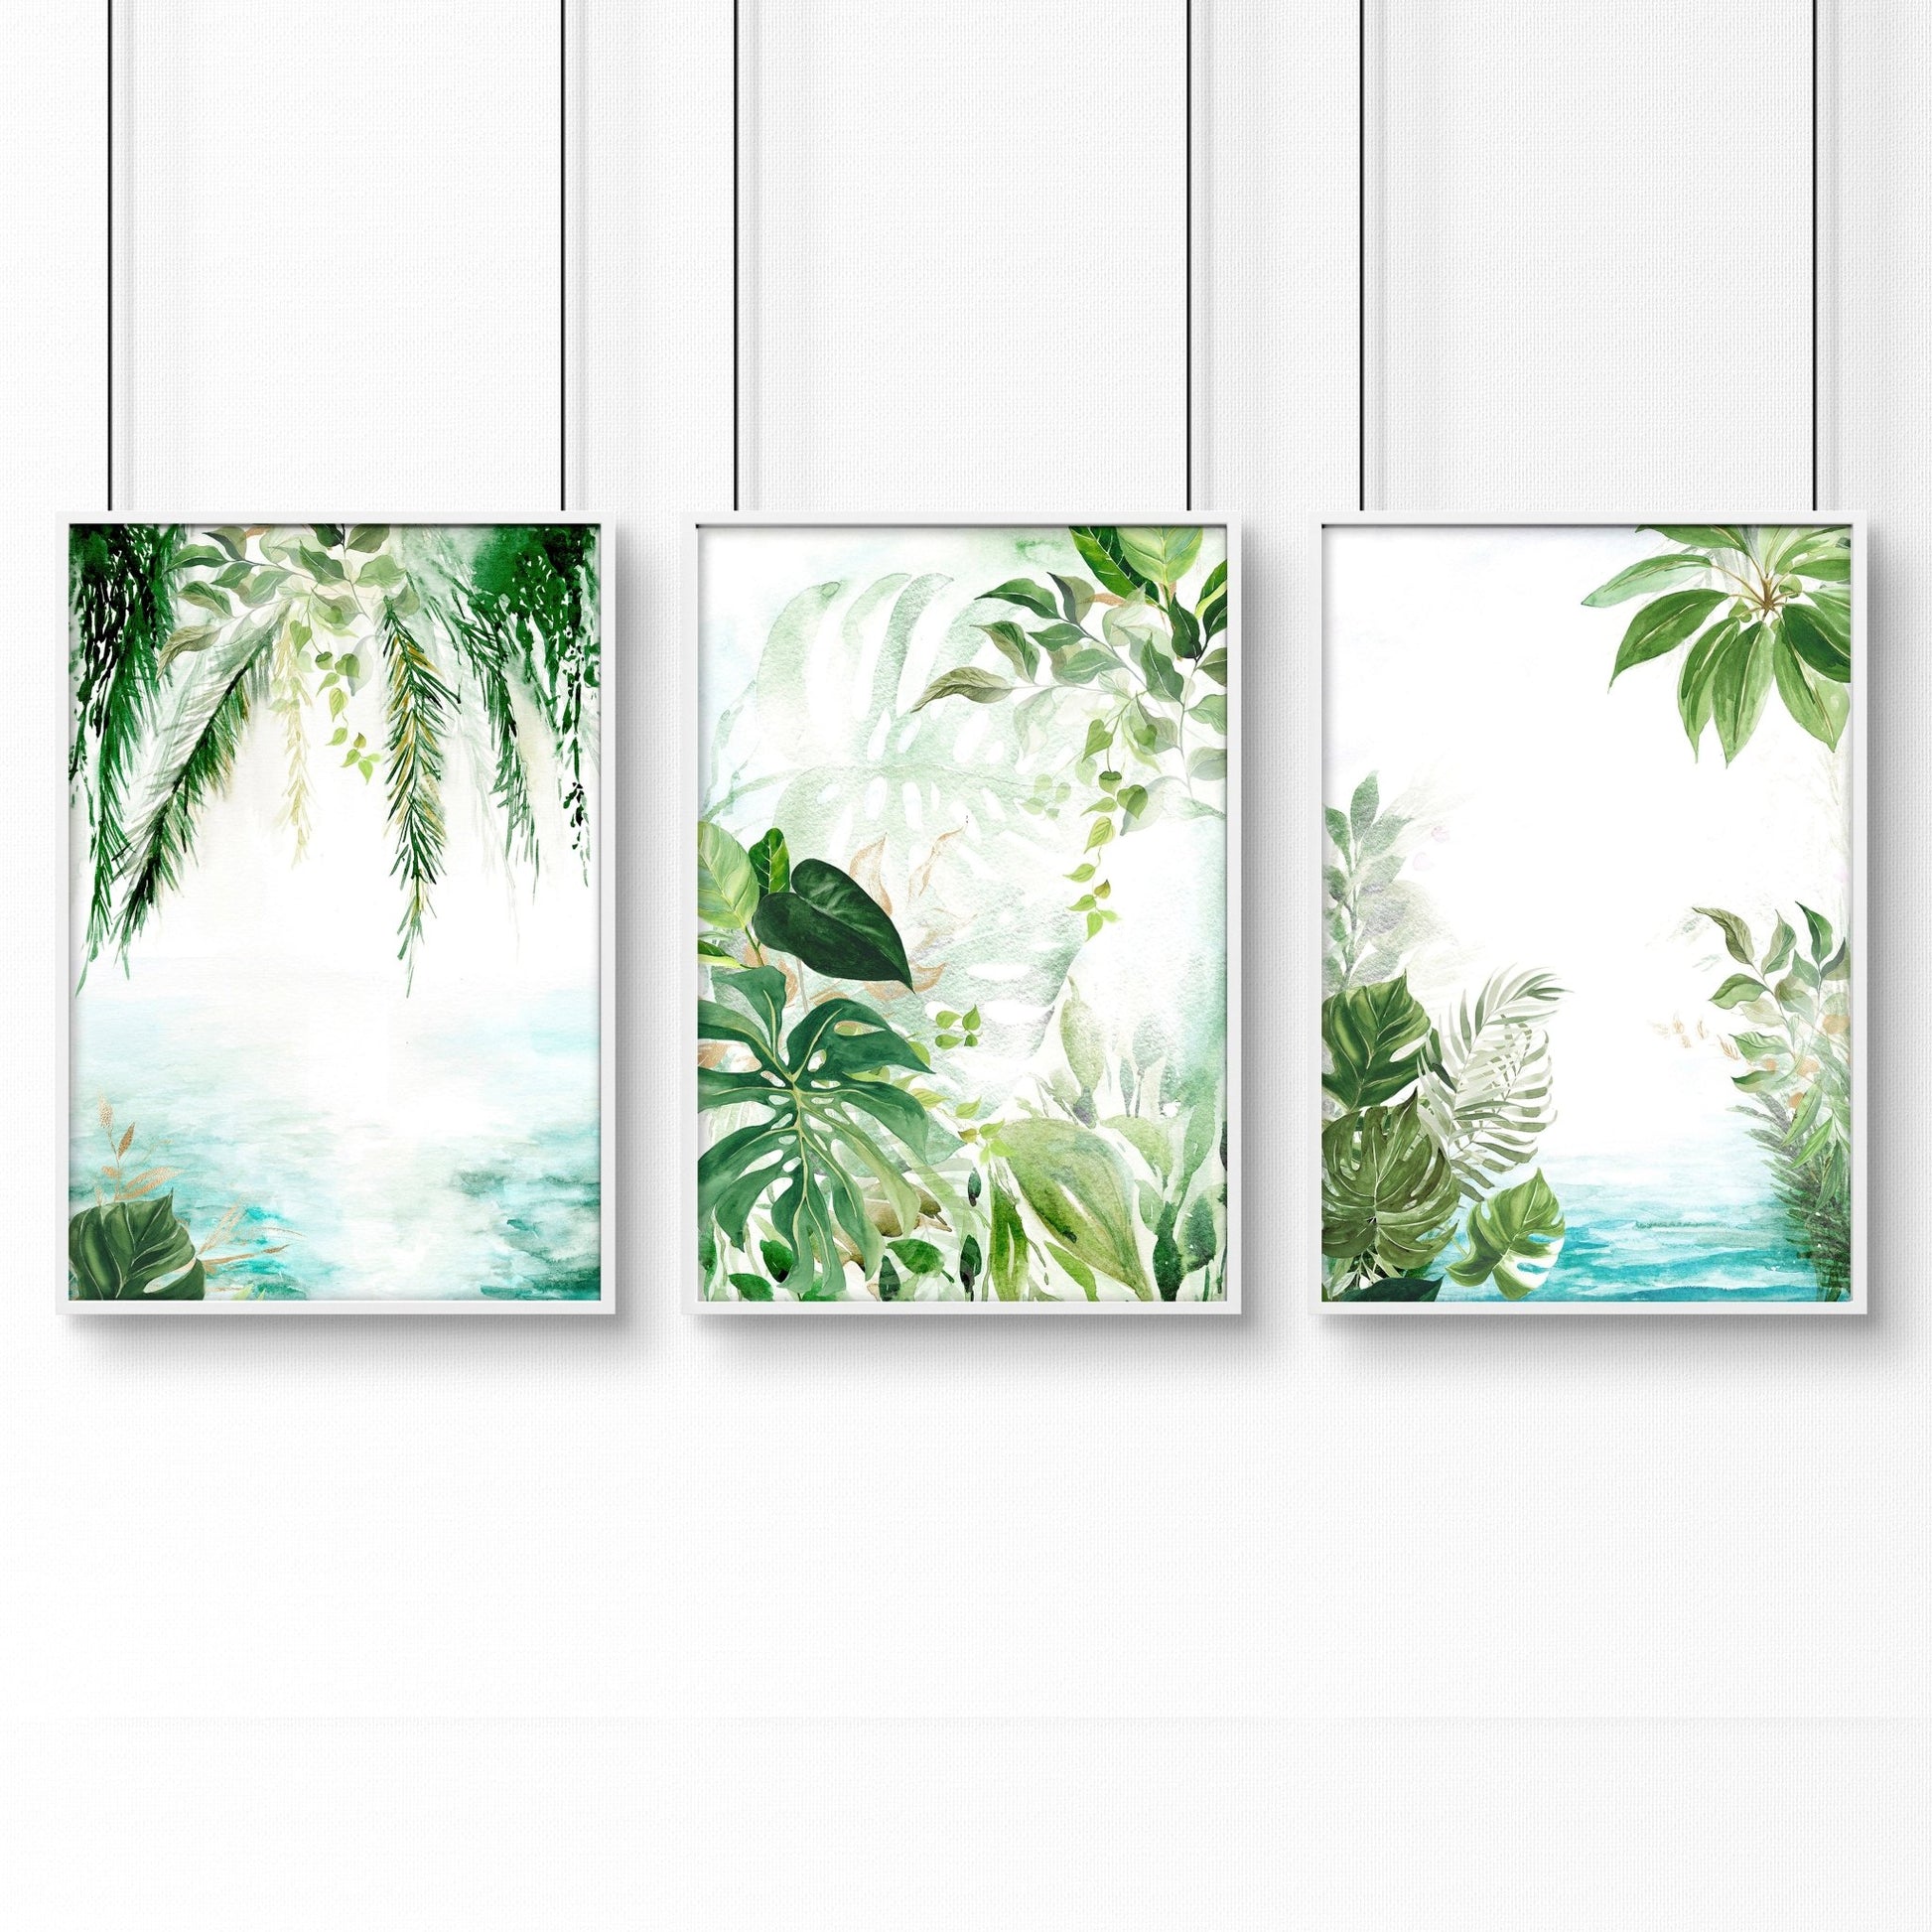 Art for office walls | set of 3 Tropical wall art prints